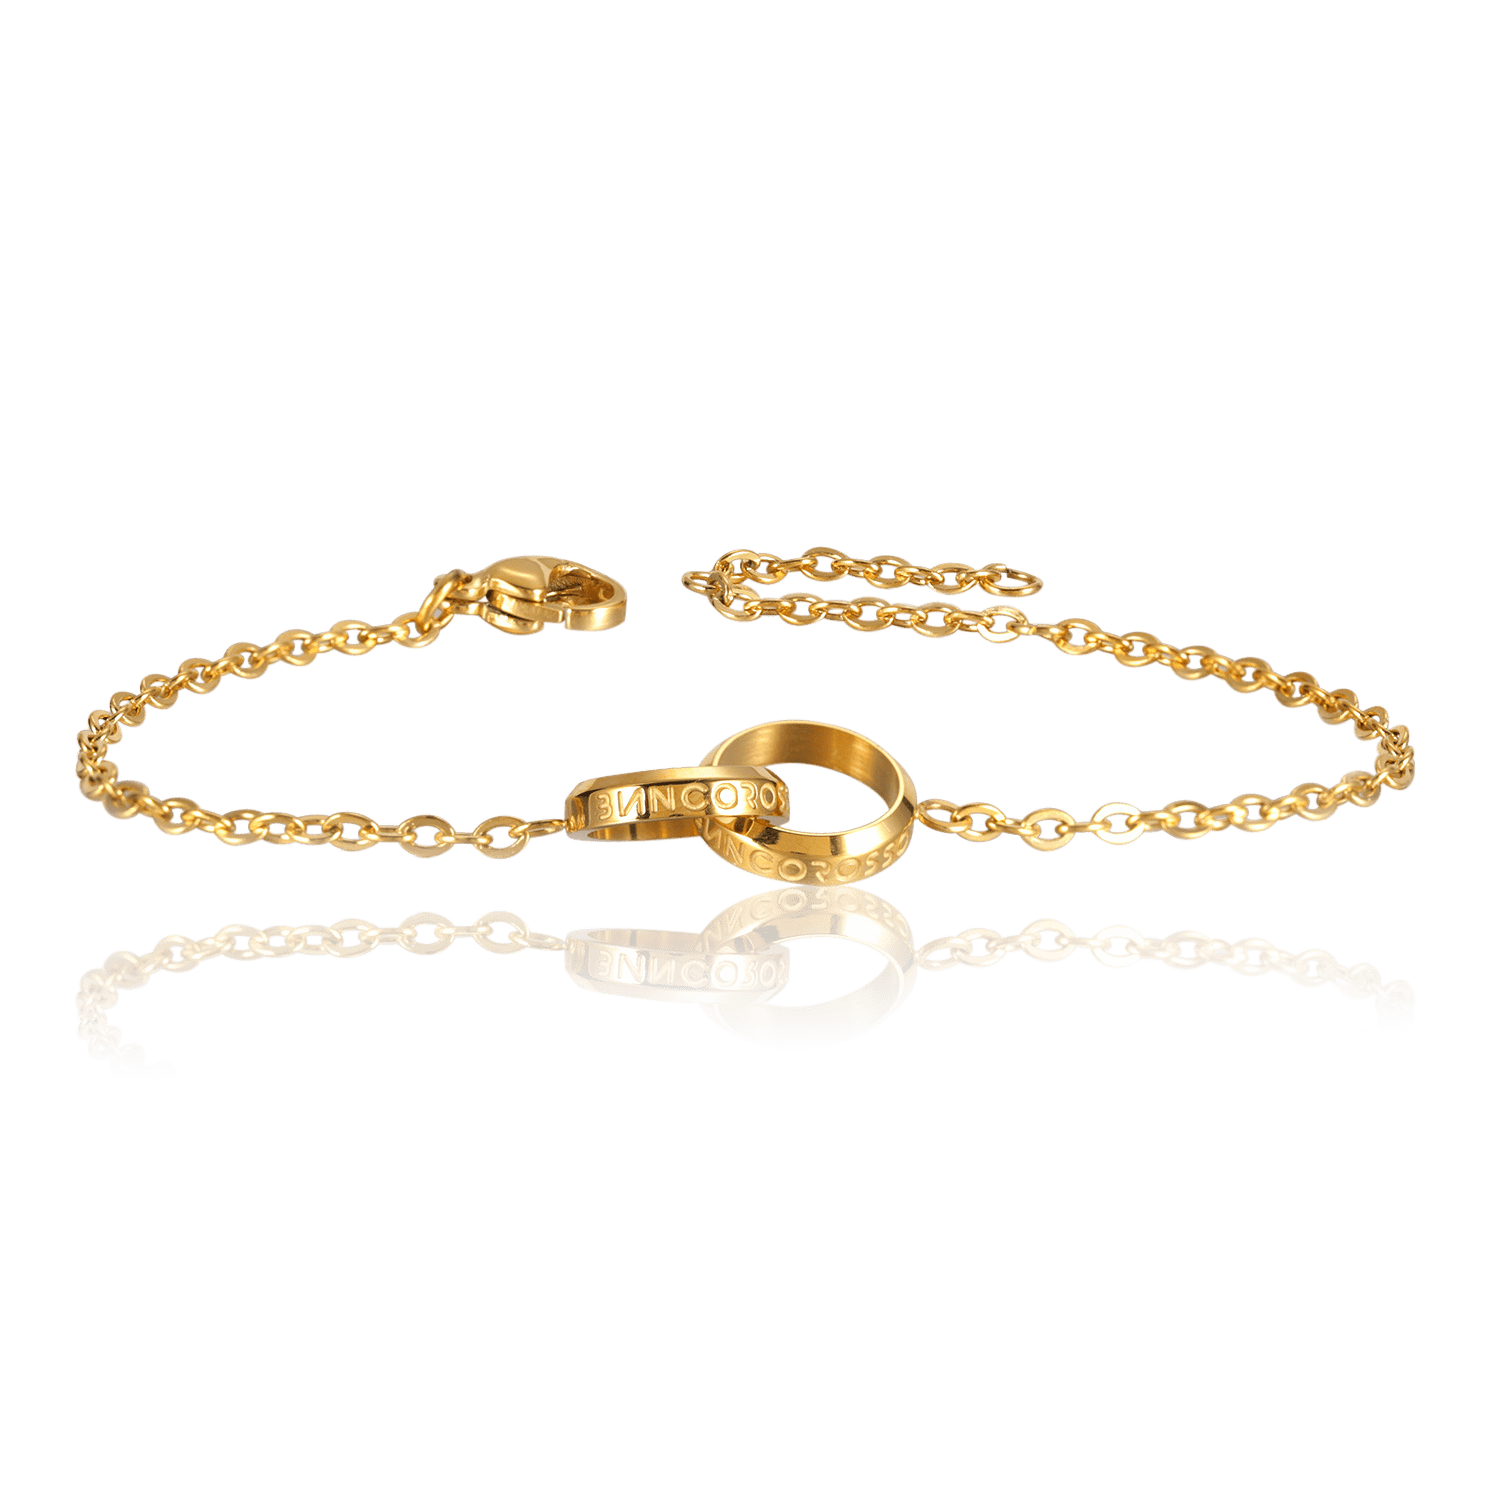 bianco rosso Bracelets To Every Woman - Eternity Bracelet cyprus greece jewelry gift free shipping europe worldwide